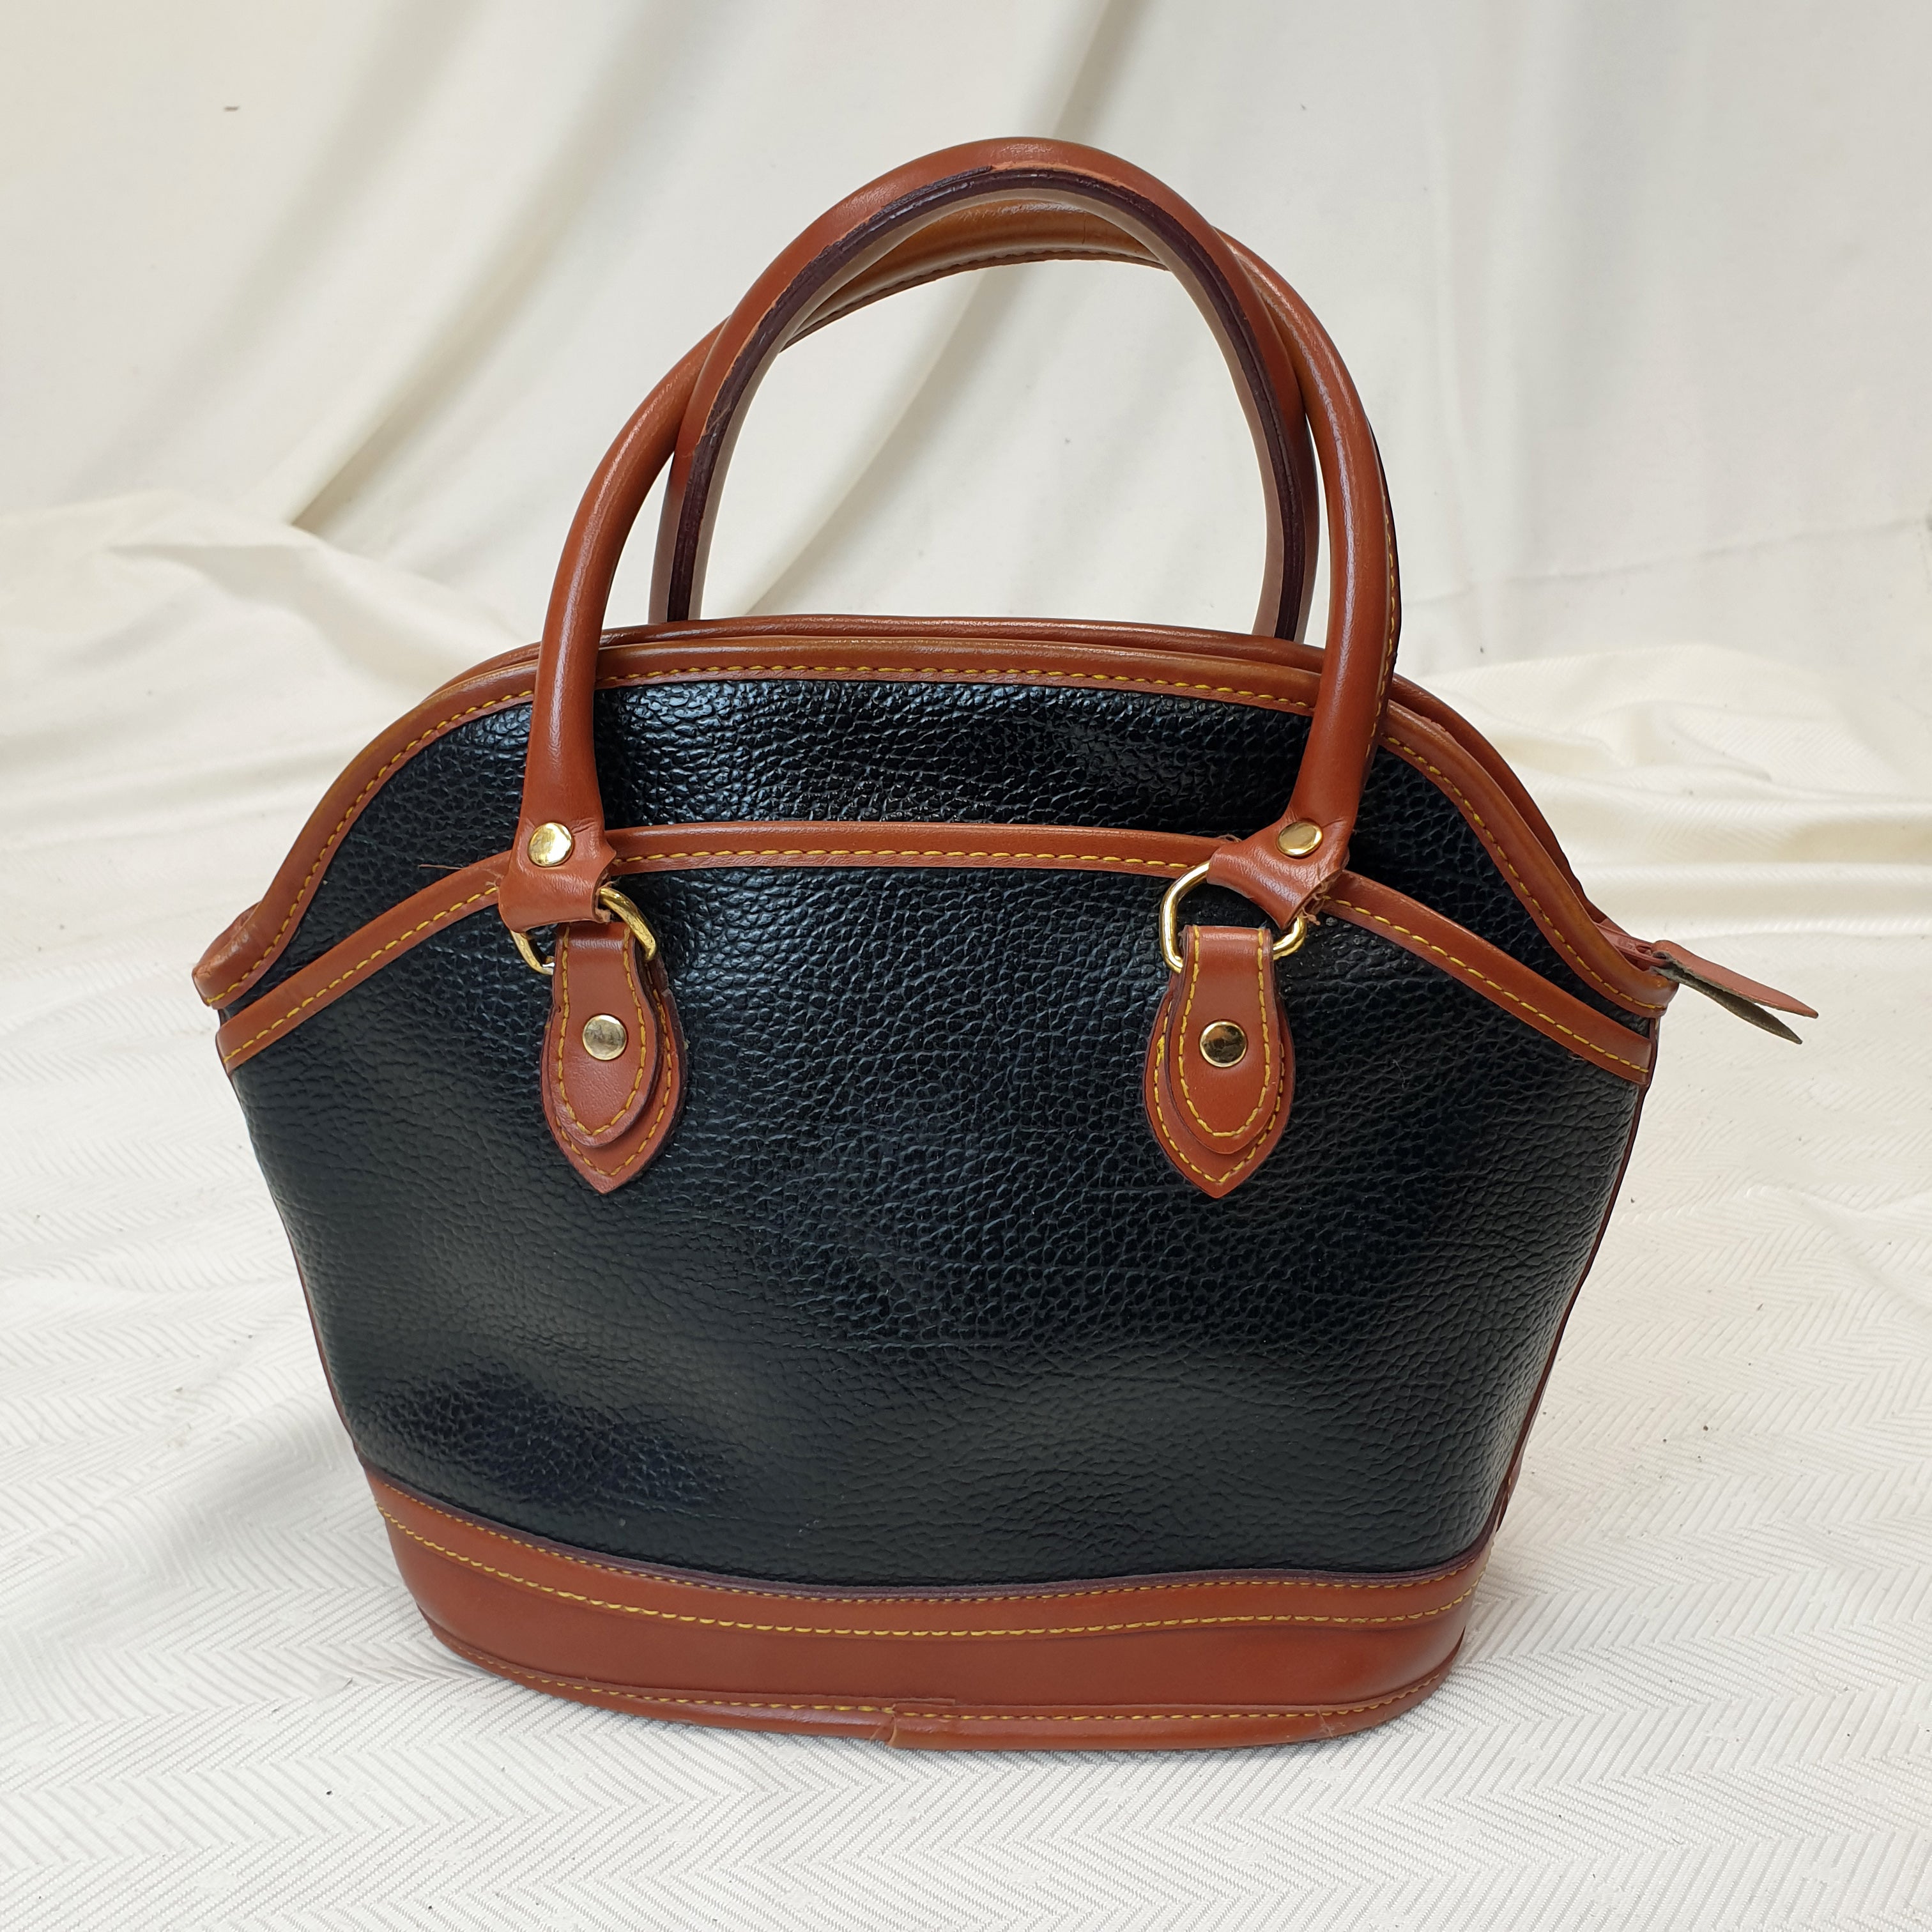 Dooney & Bourke Black Leather Handbag